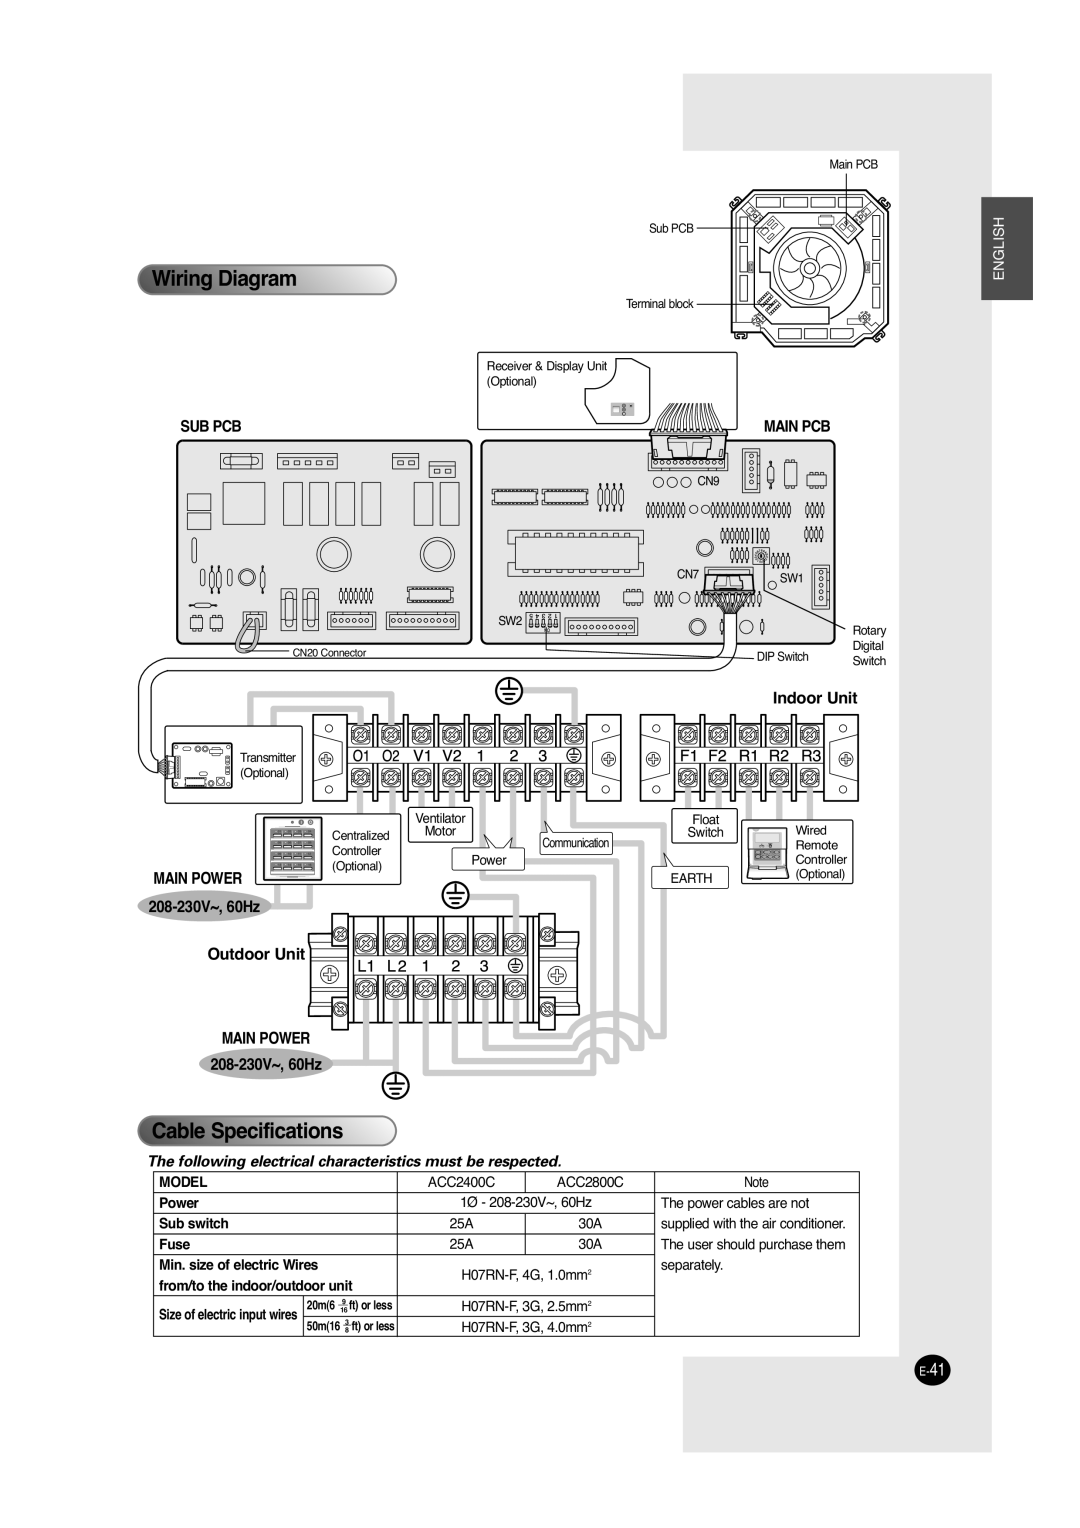 Samsung UCC2400C Wiring Diagram, Sub Pcb, Indoor Unit, Main Power, Outdoor Unit MAIN POWER 208-230V~,60Hz, English 